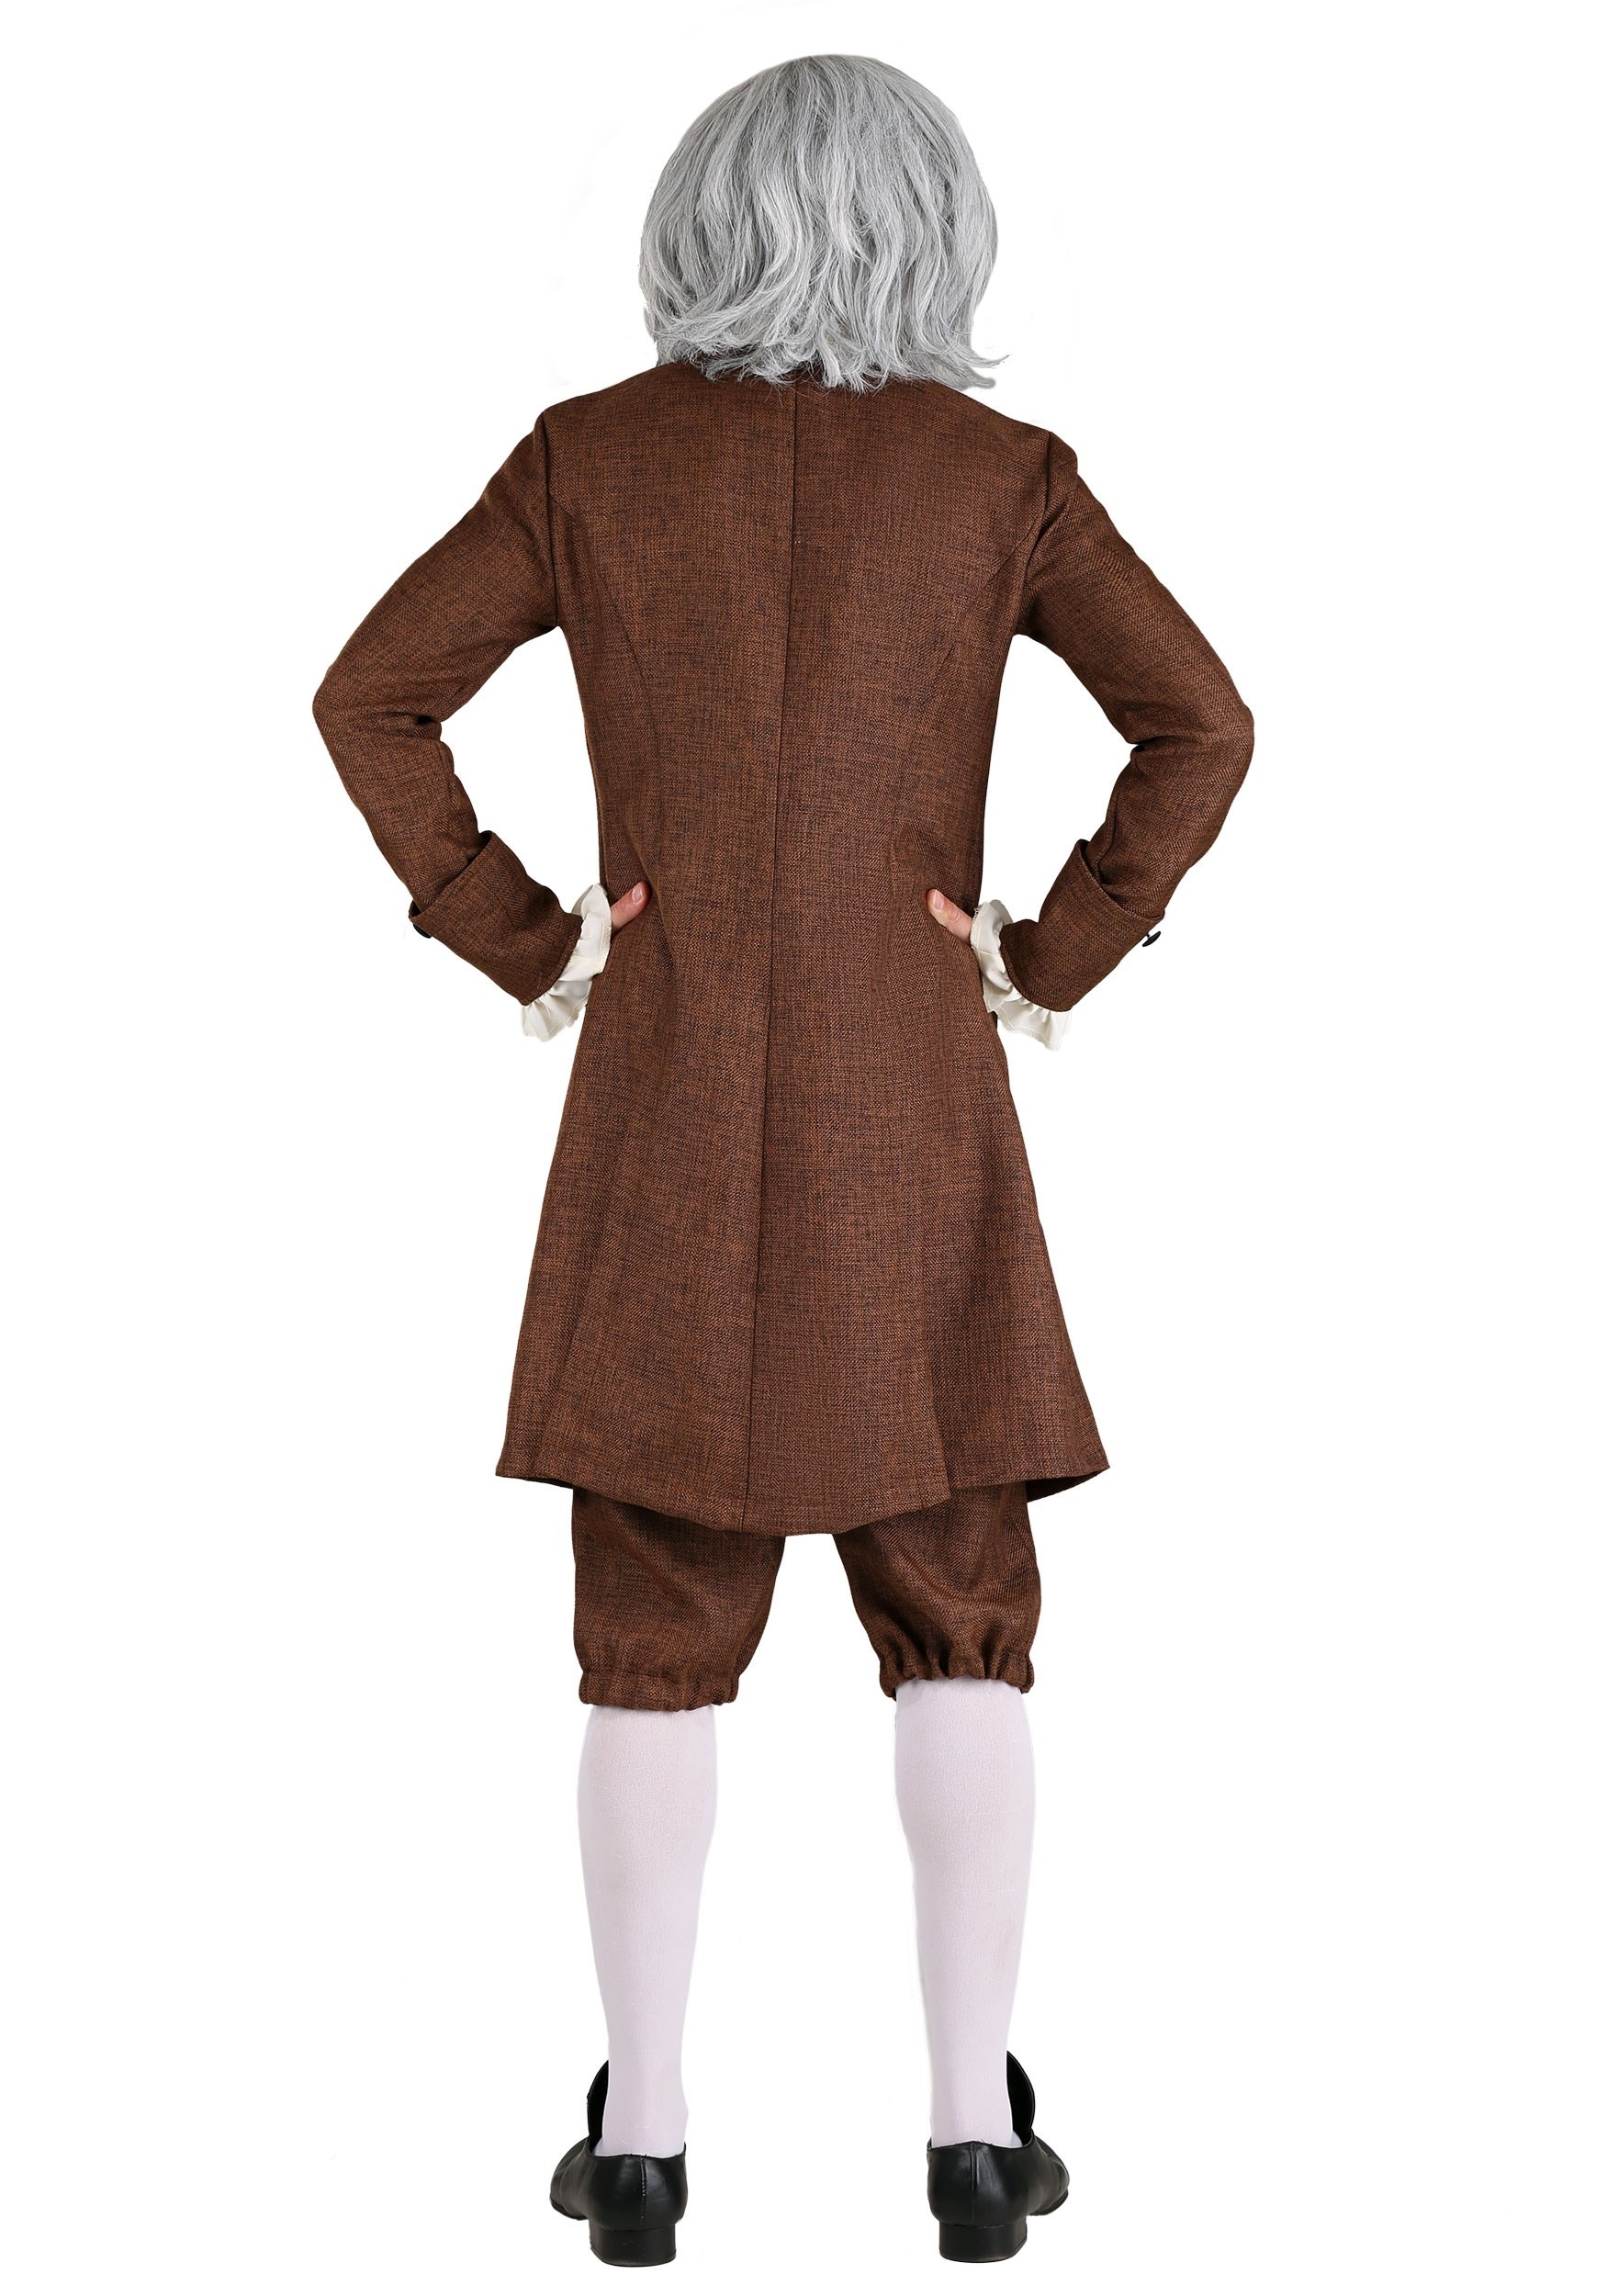 Colonial Benjamin Franklin Fancy Dress Costume For Men's